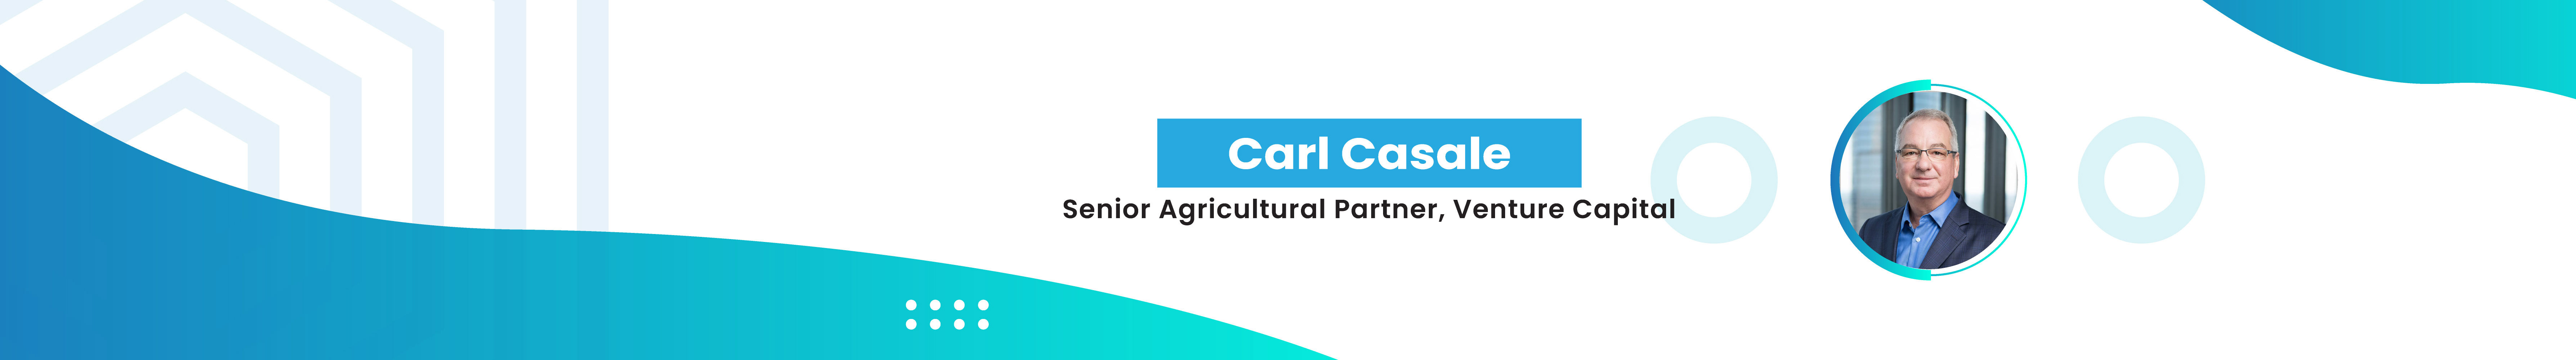 Carl Casales profilbanner